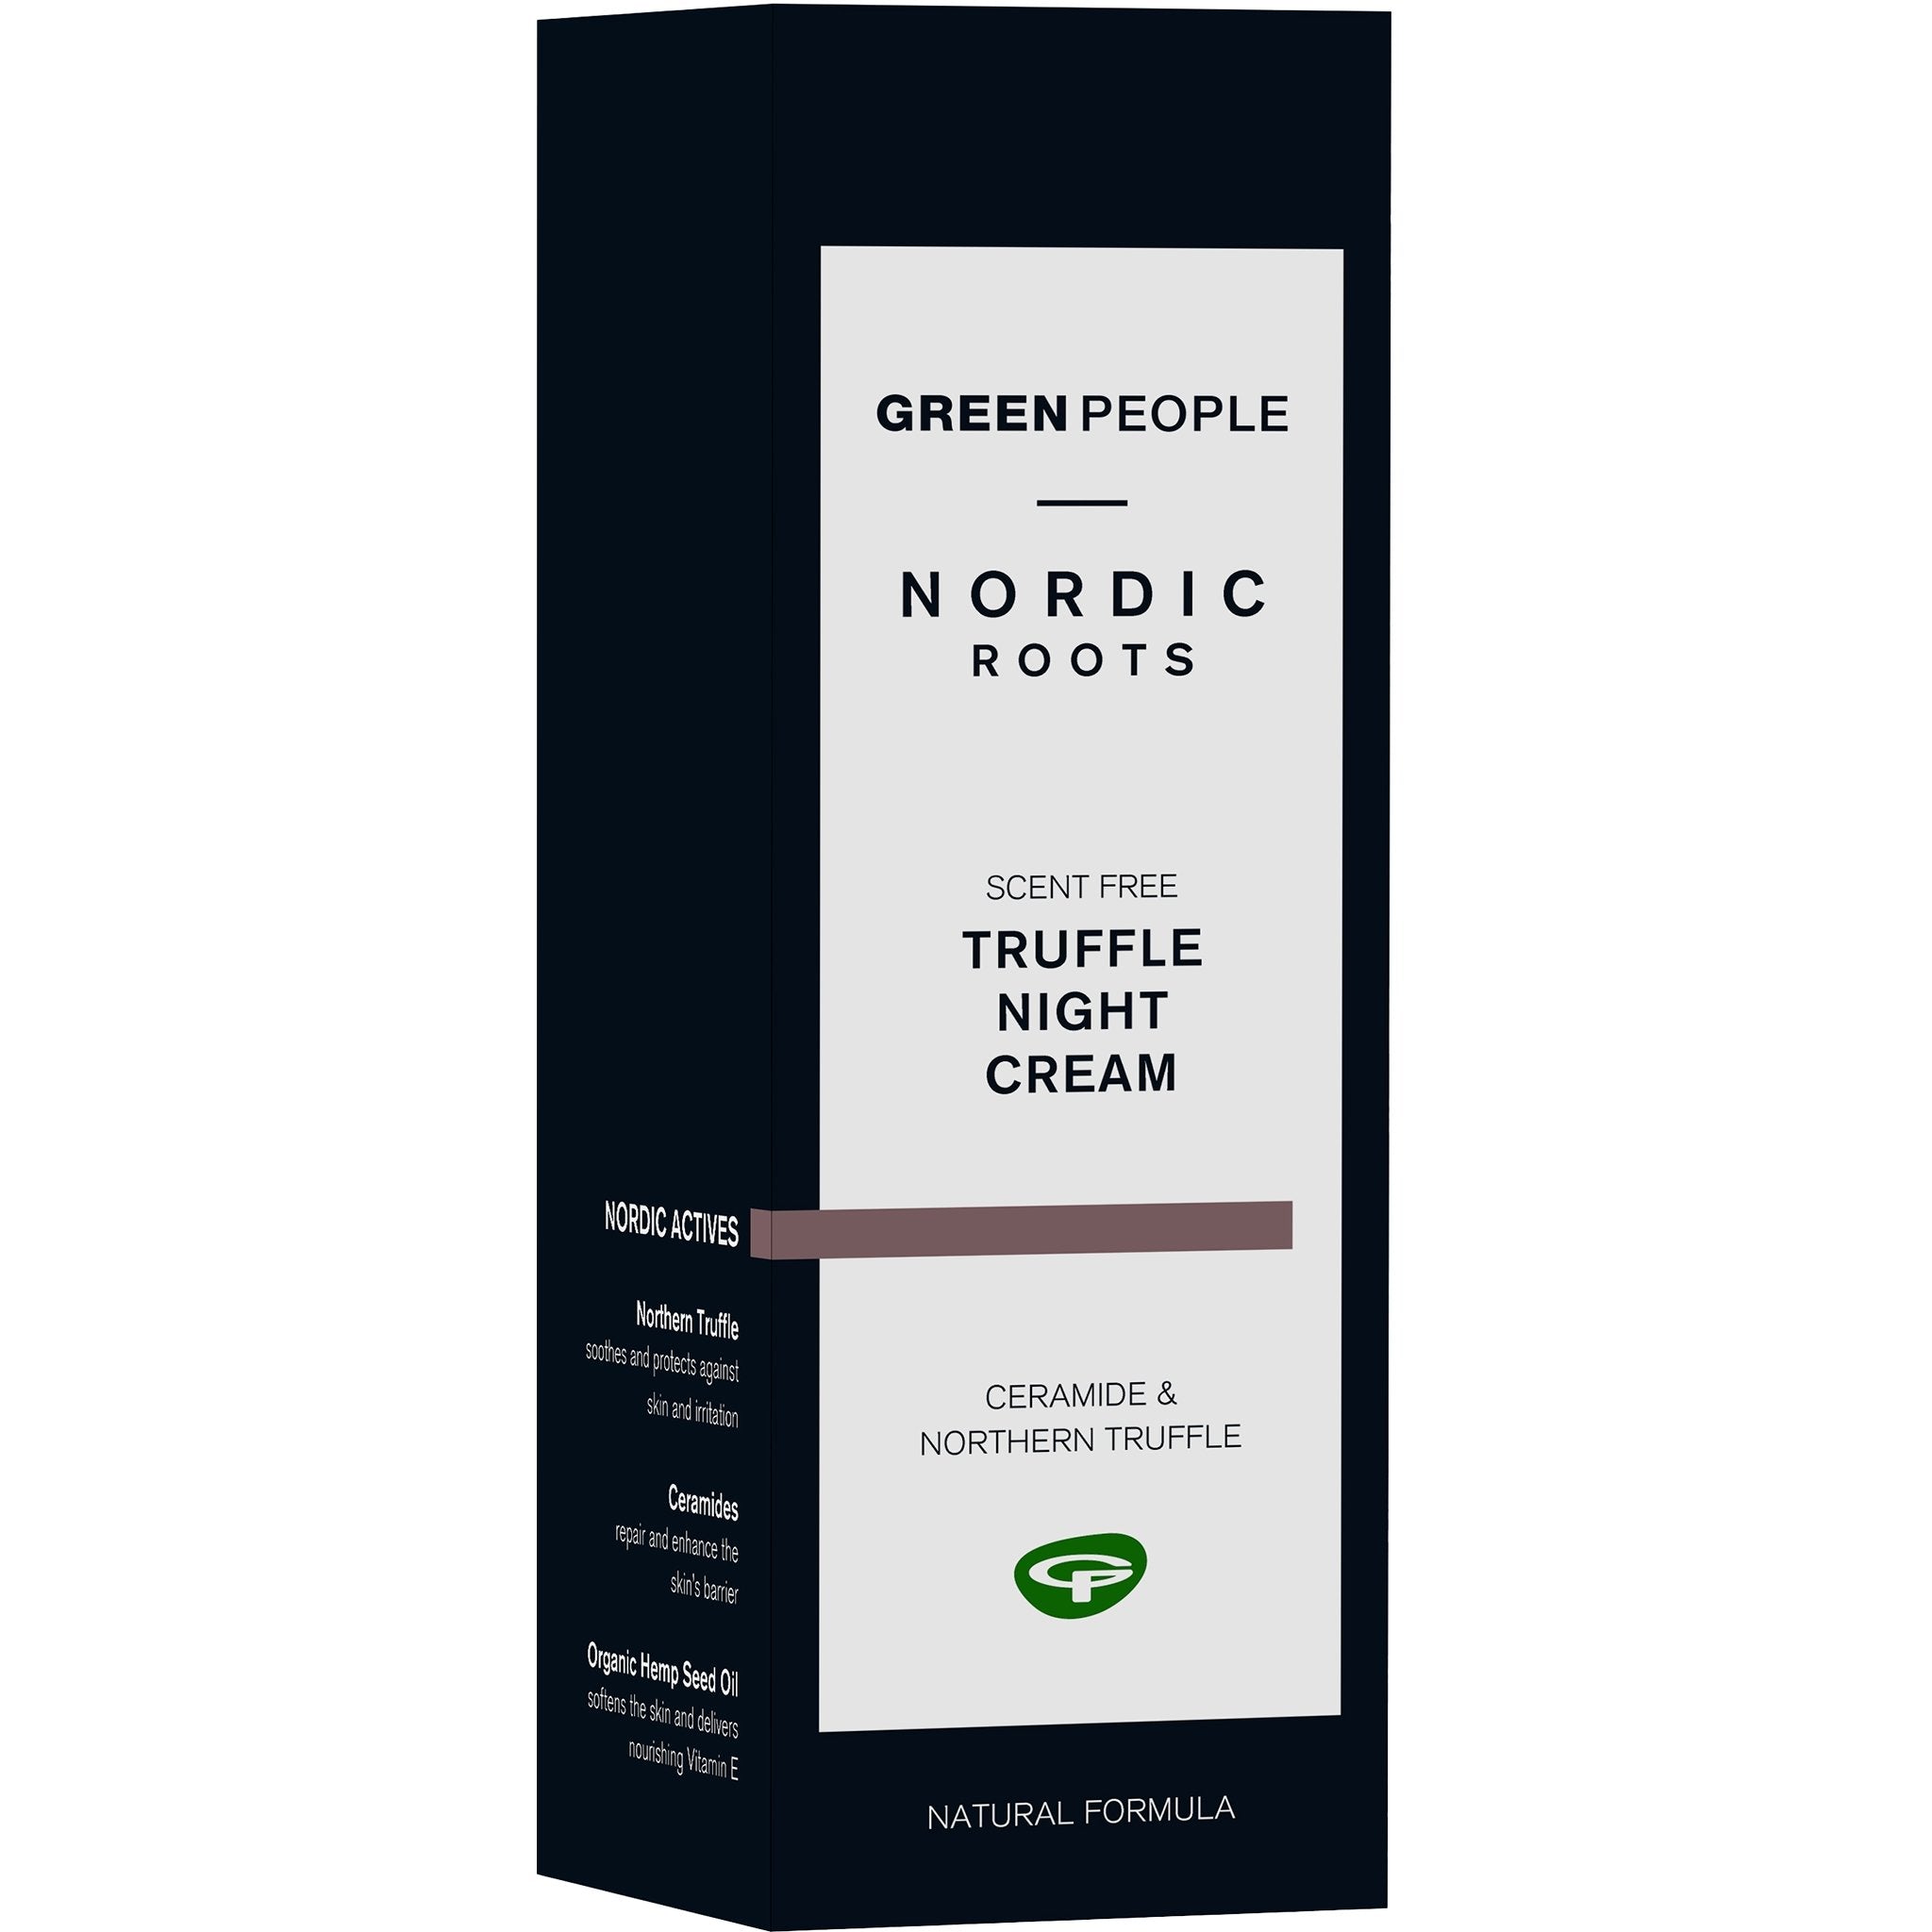 Nordic Roots Truffle Night Cream - mypure.co.uk